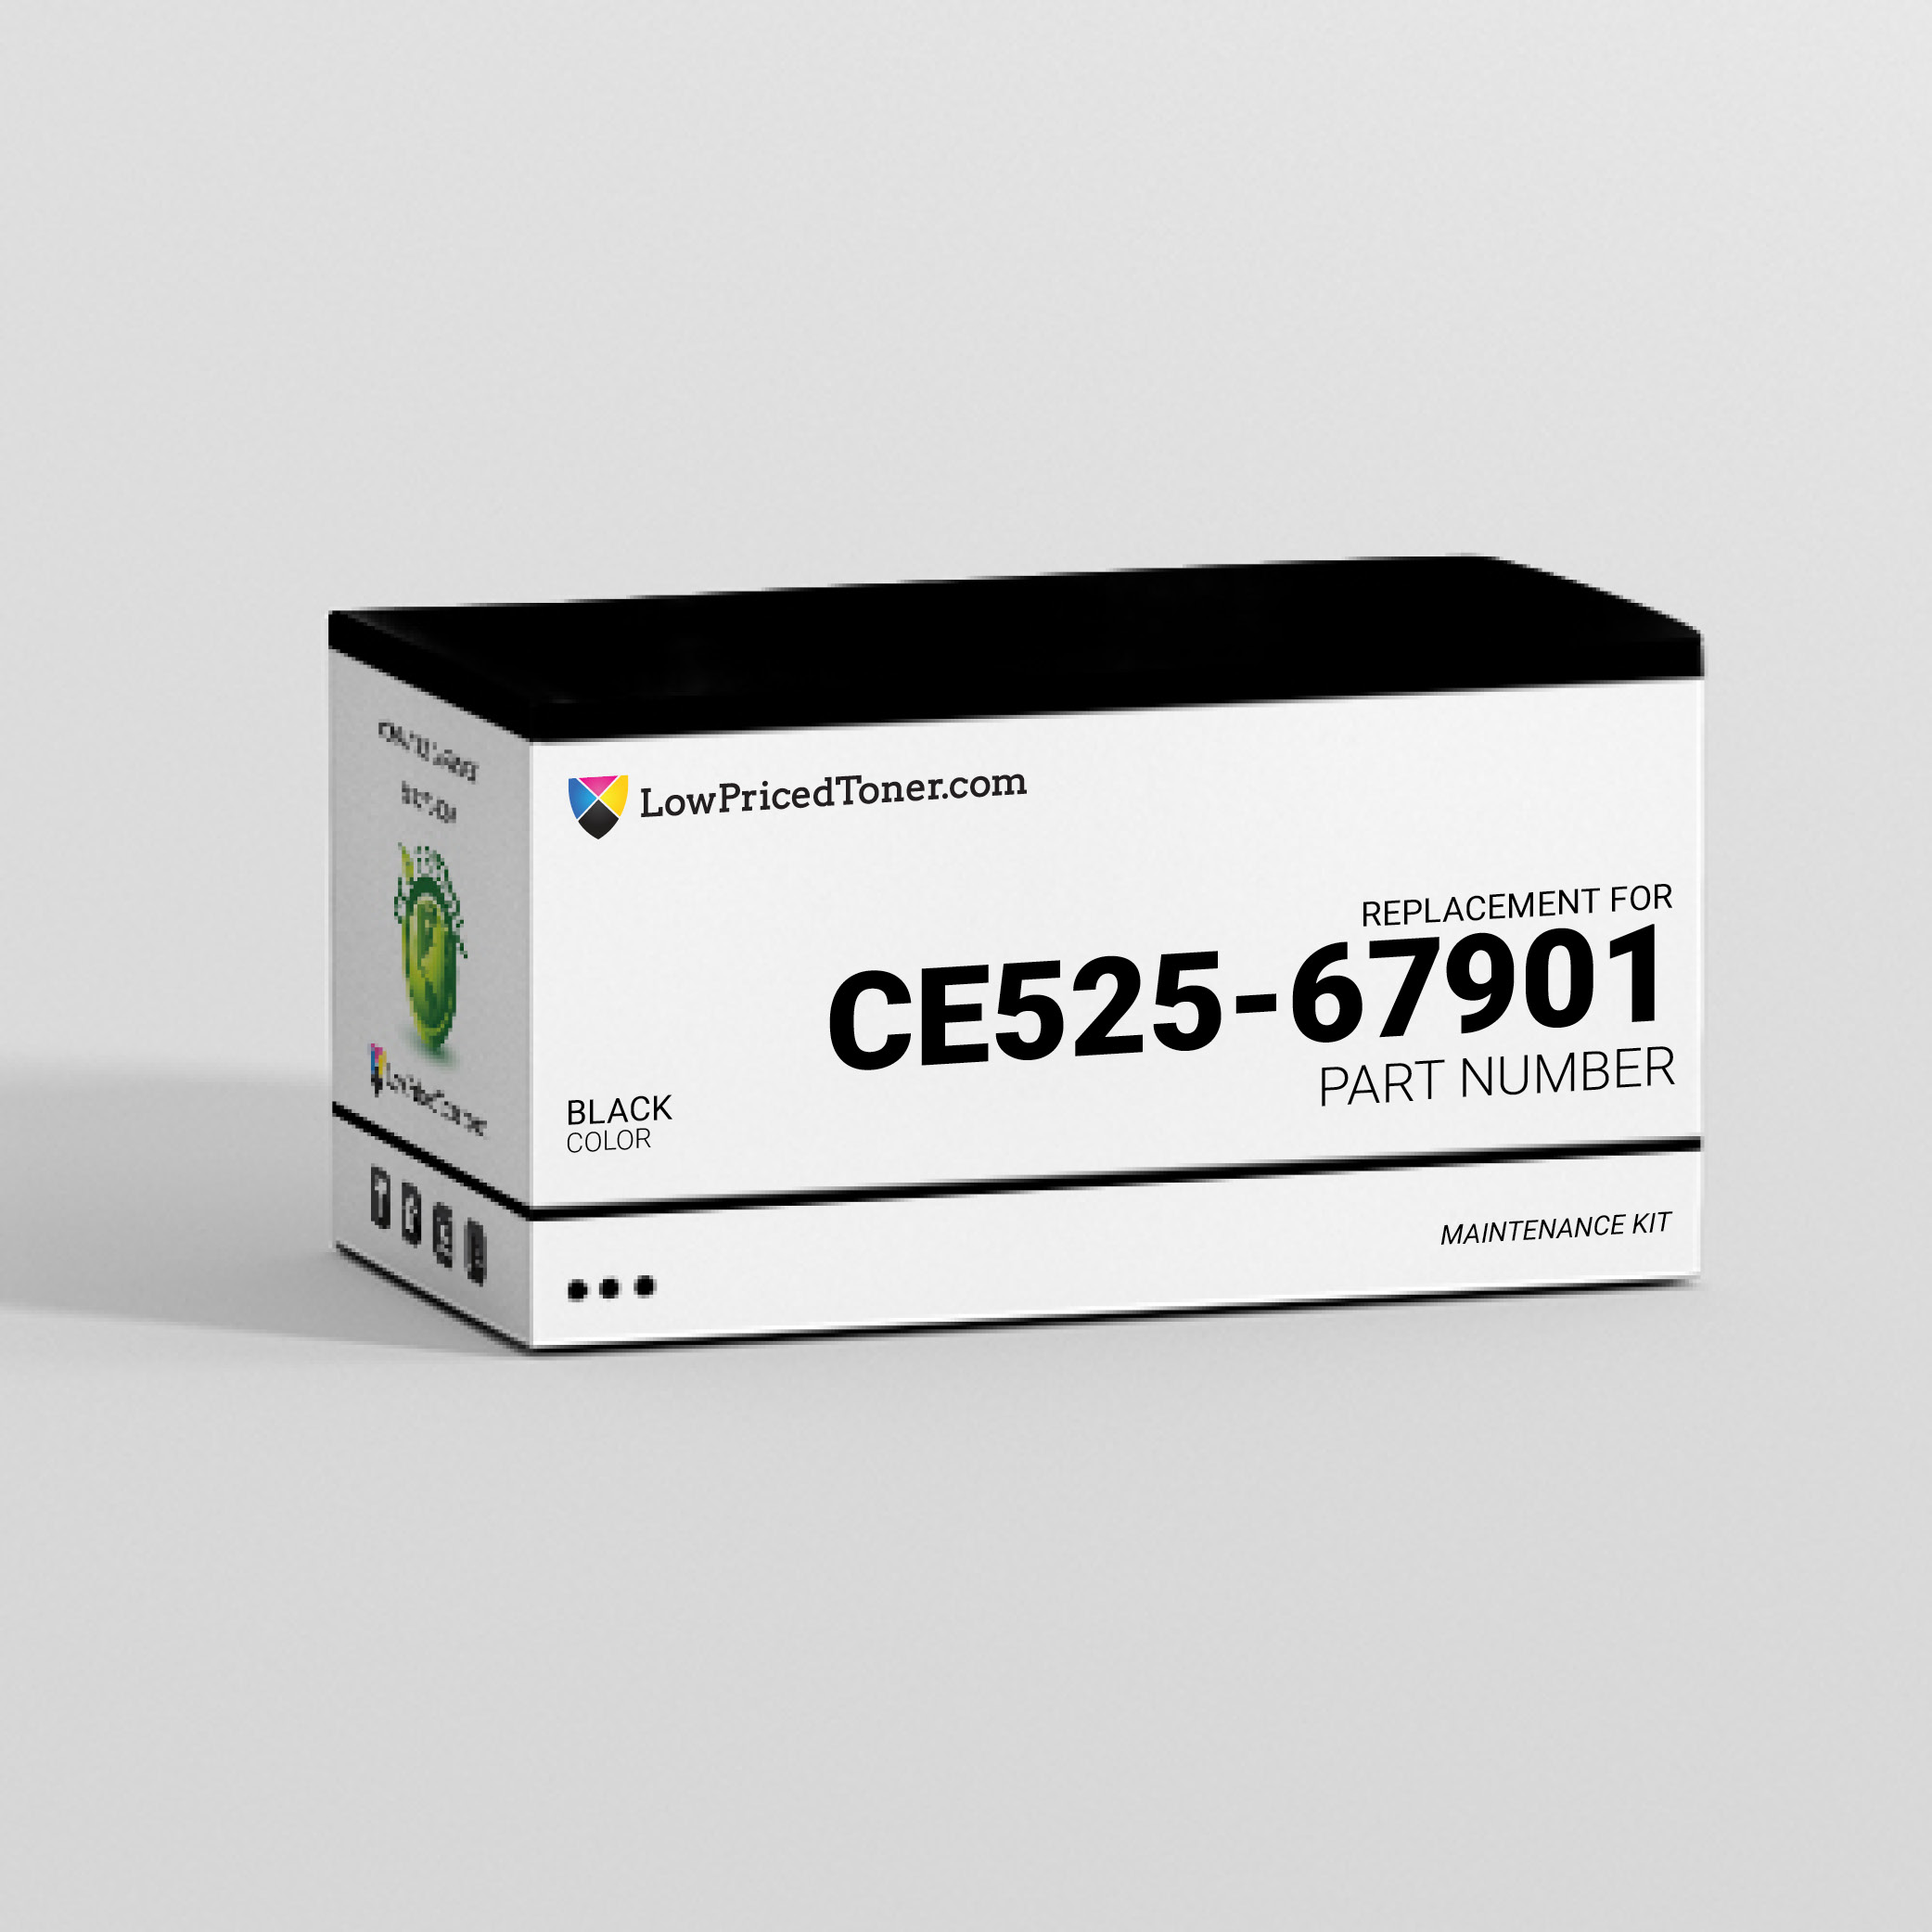 HP CE525-67901 Remanufactured Black Maintenance Kit